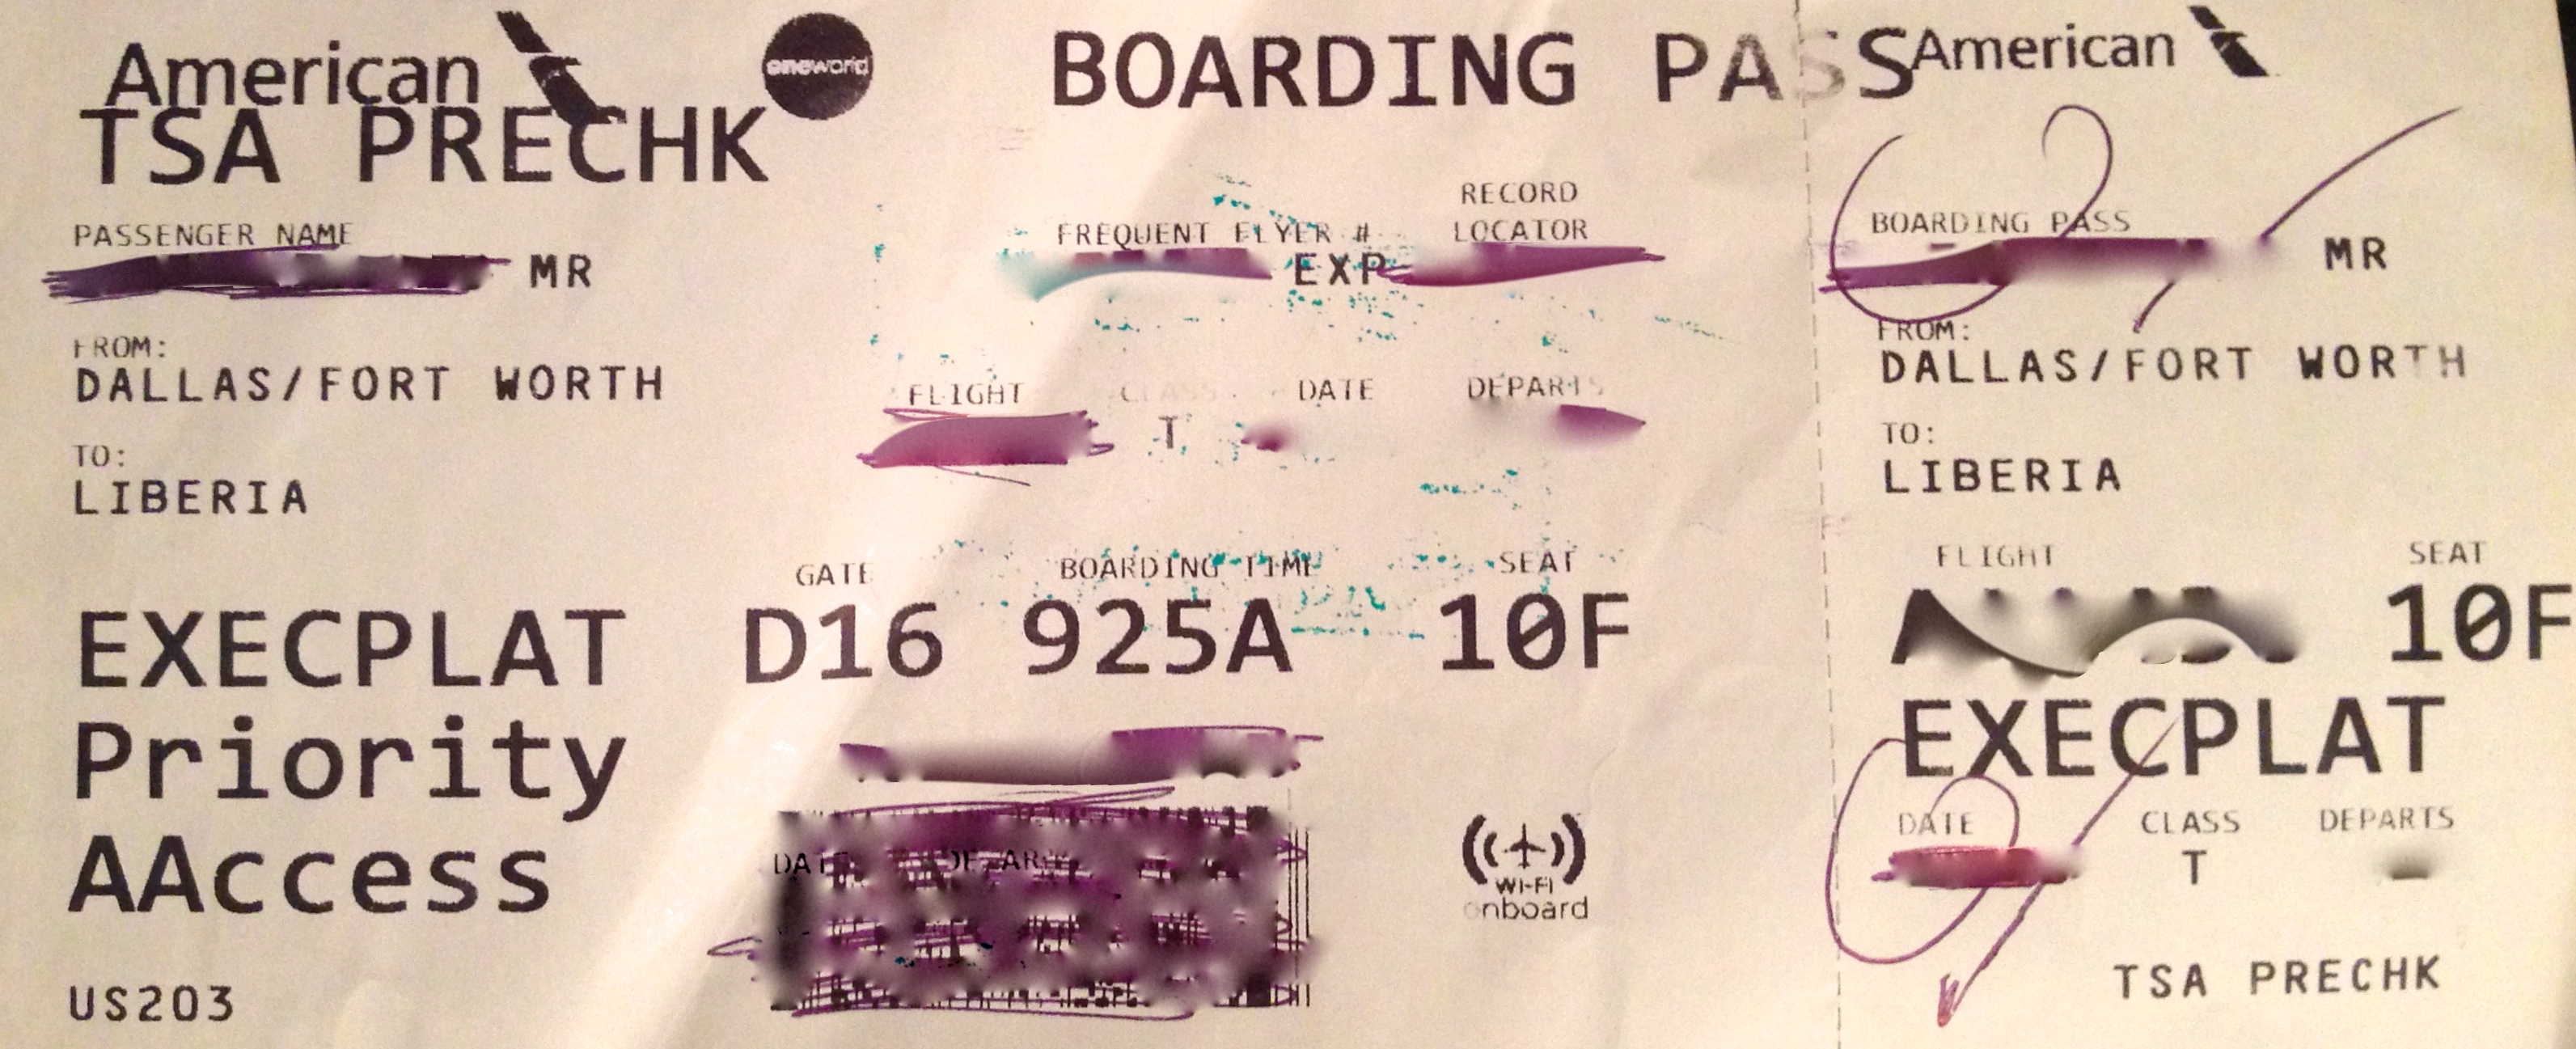 AA Boarding Pass